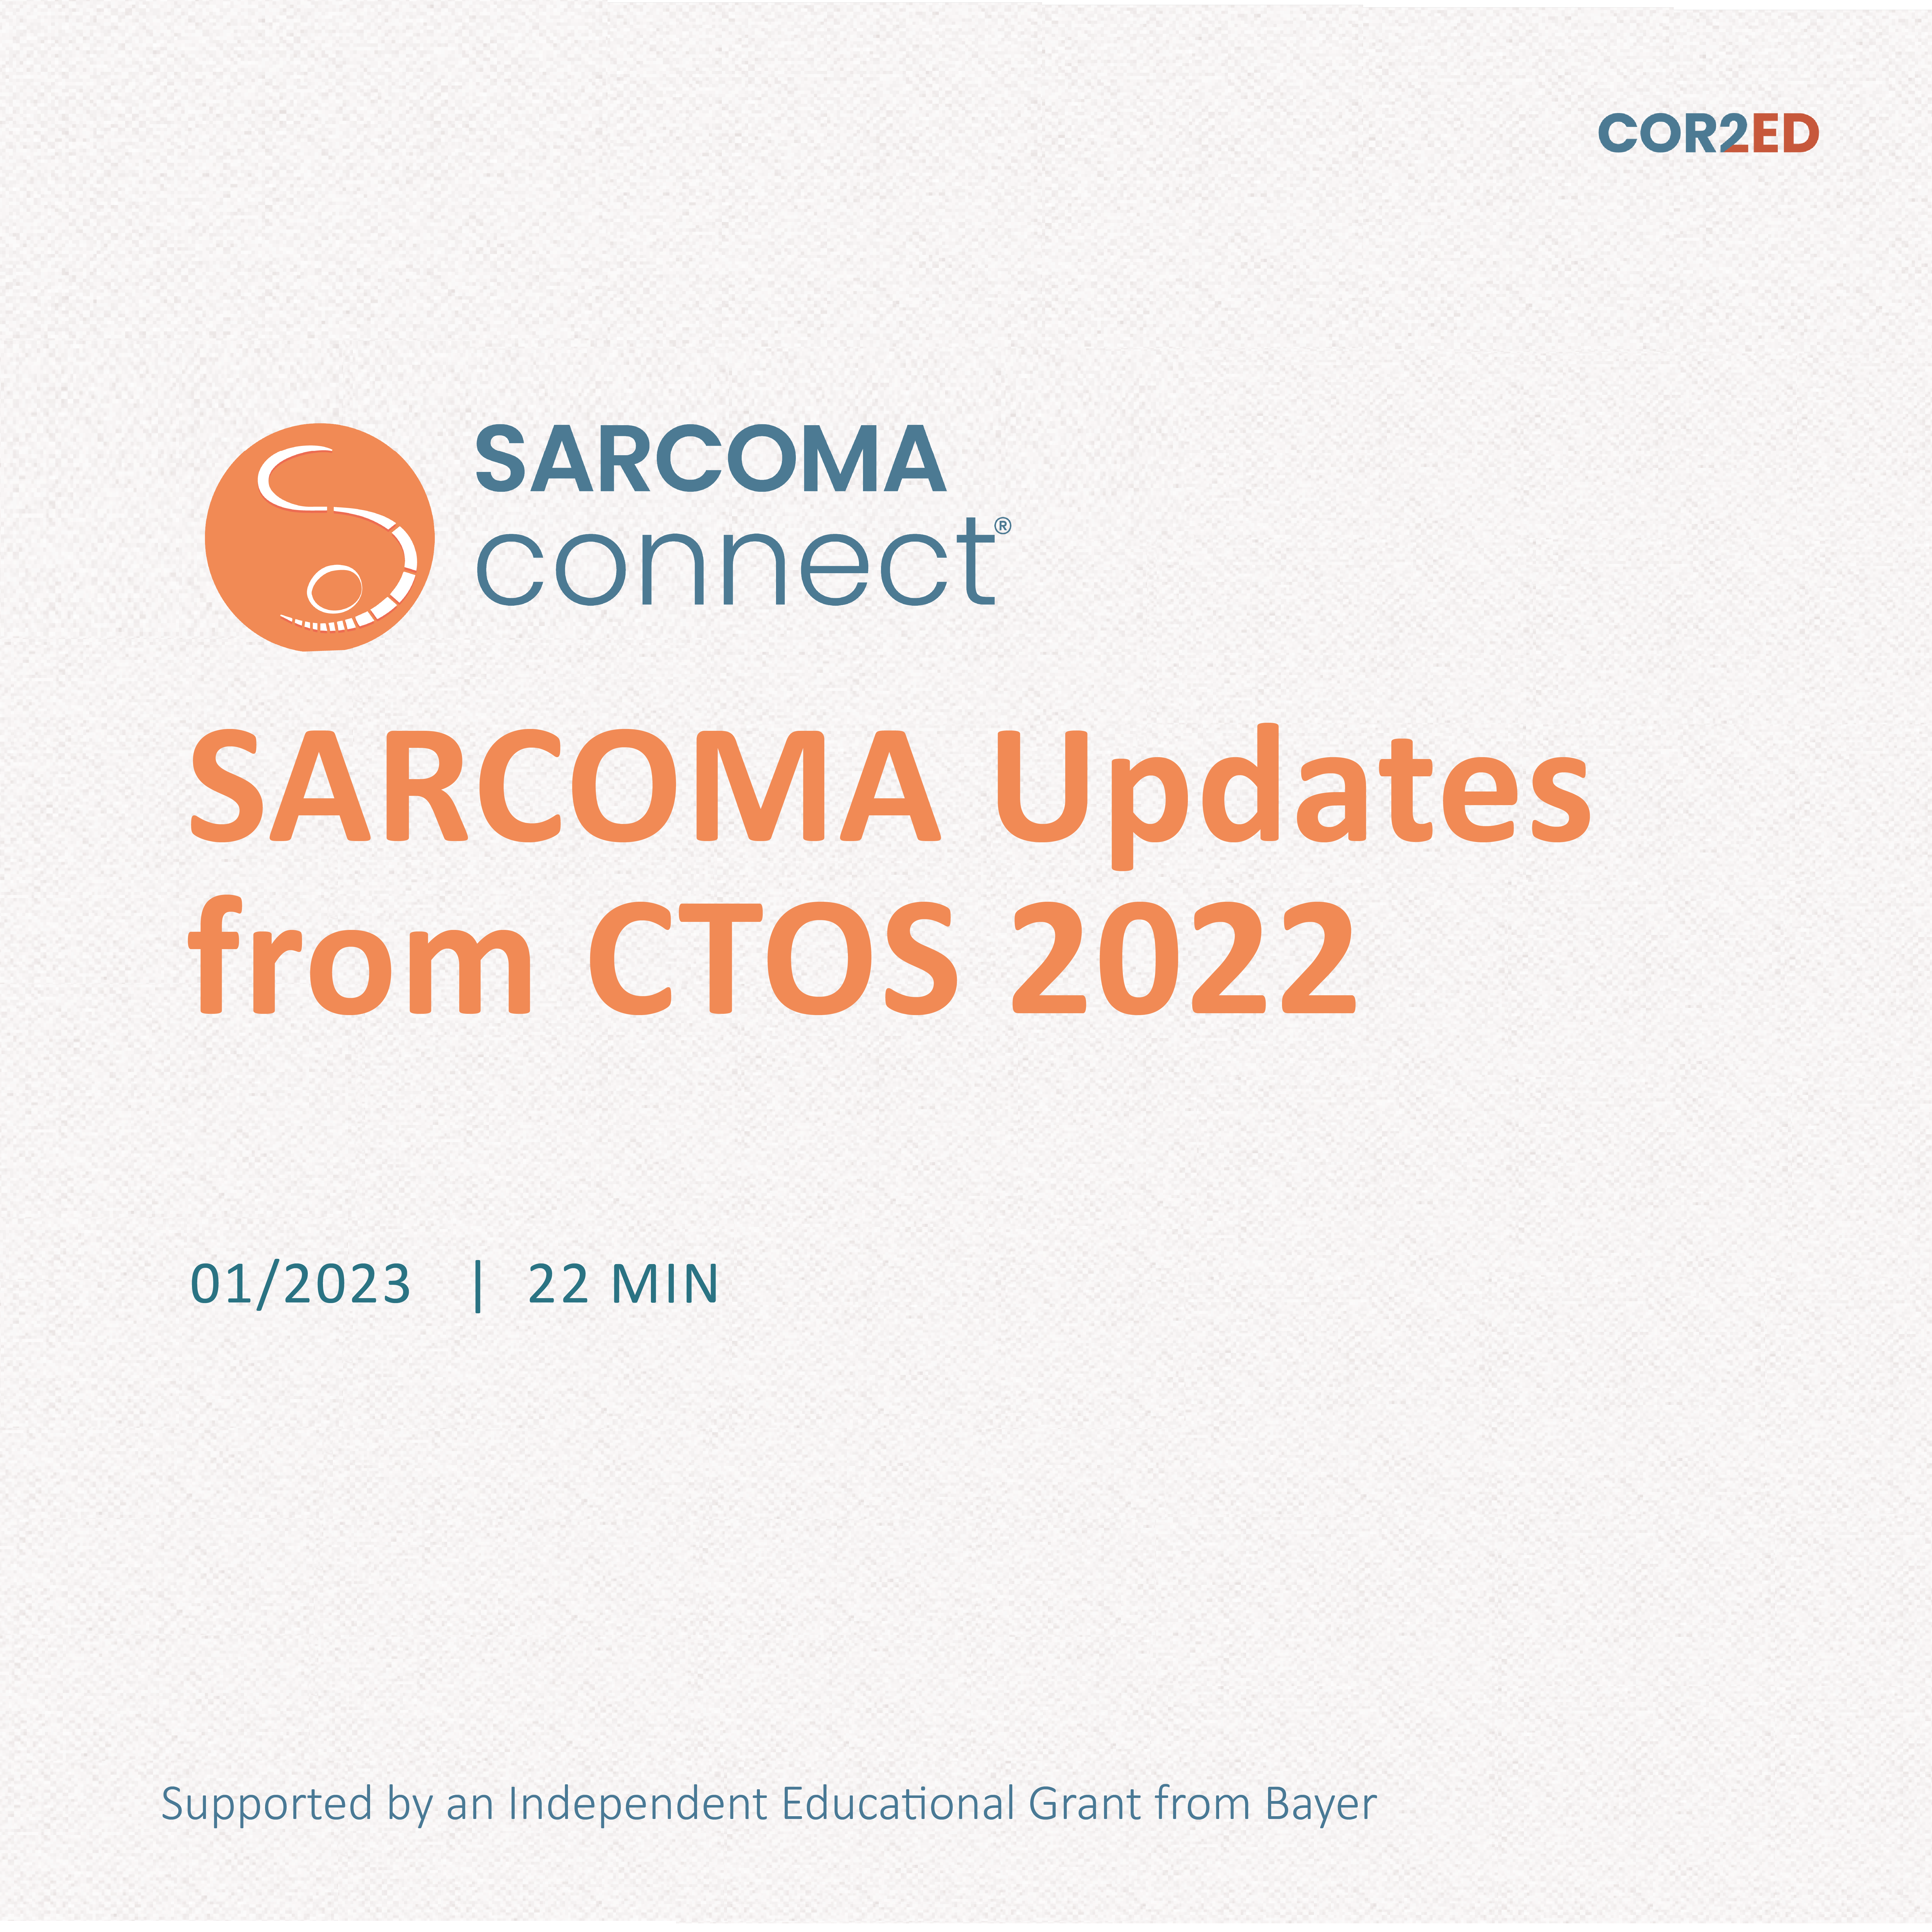 SARCOMA updates from CTOS 2022